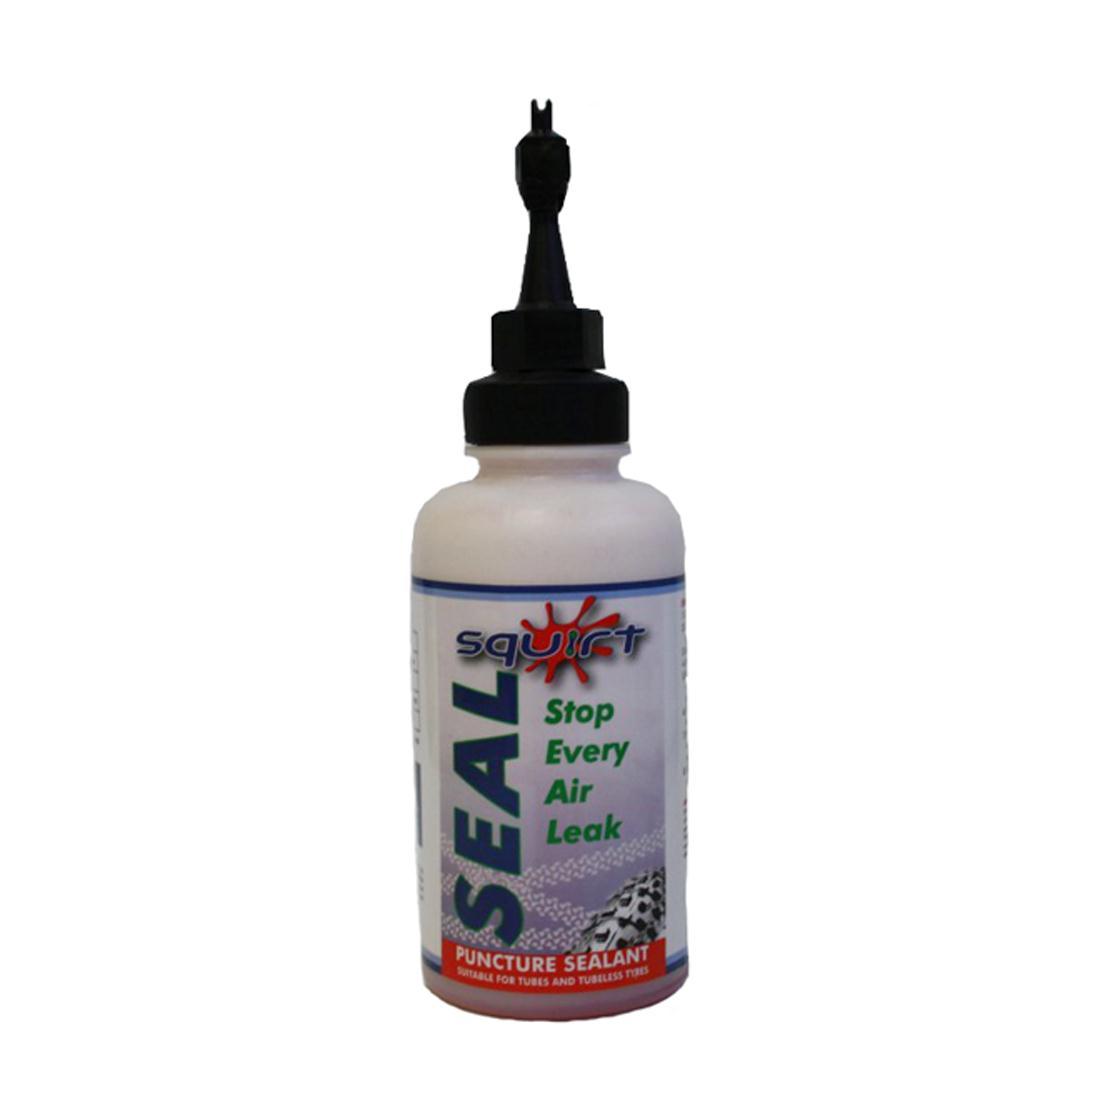 Sealant anti leak and puncture 200 ml